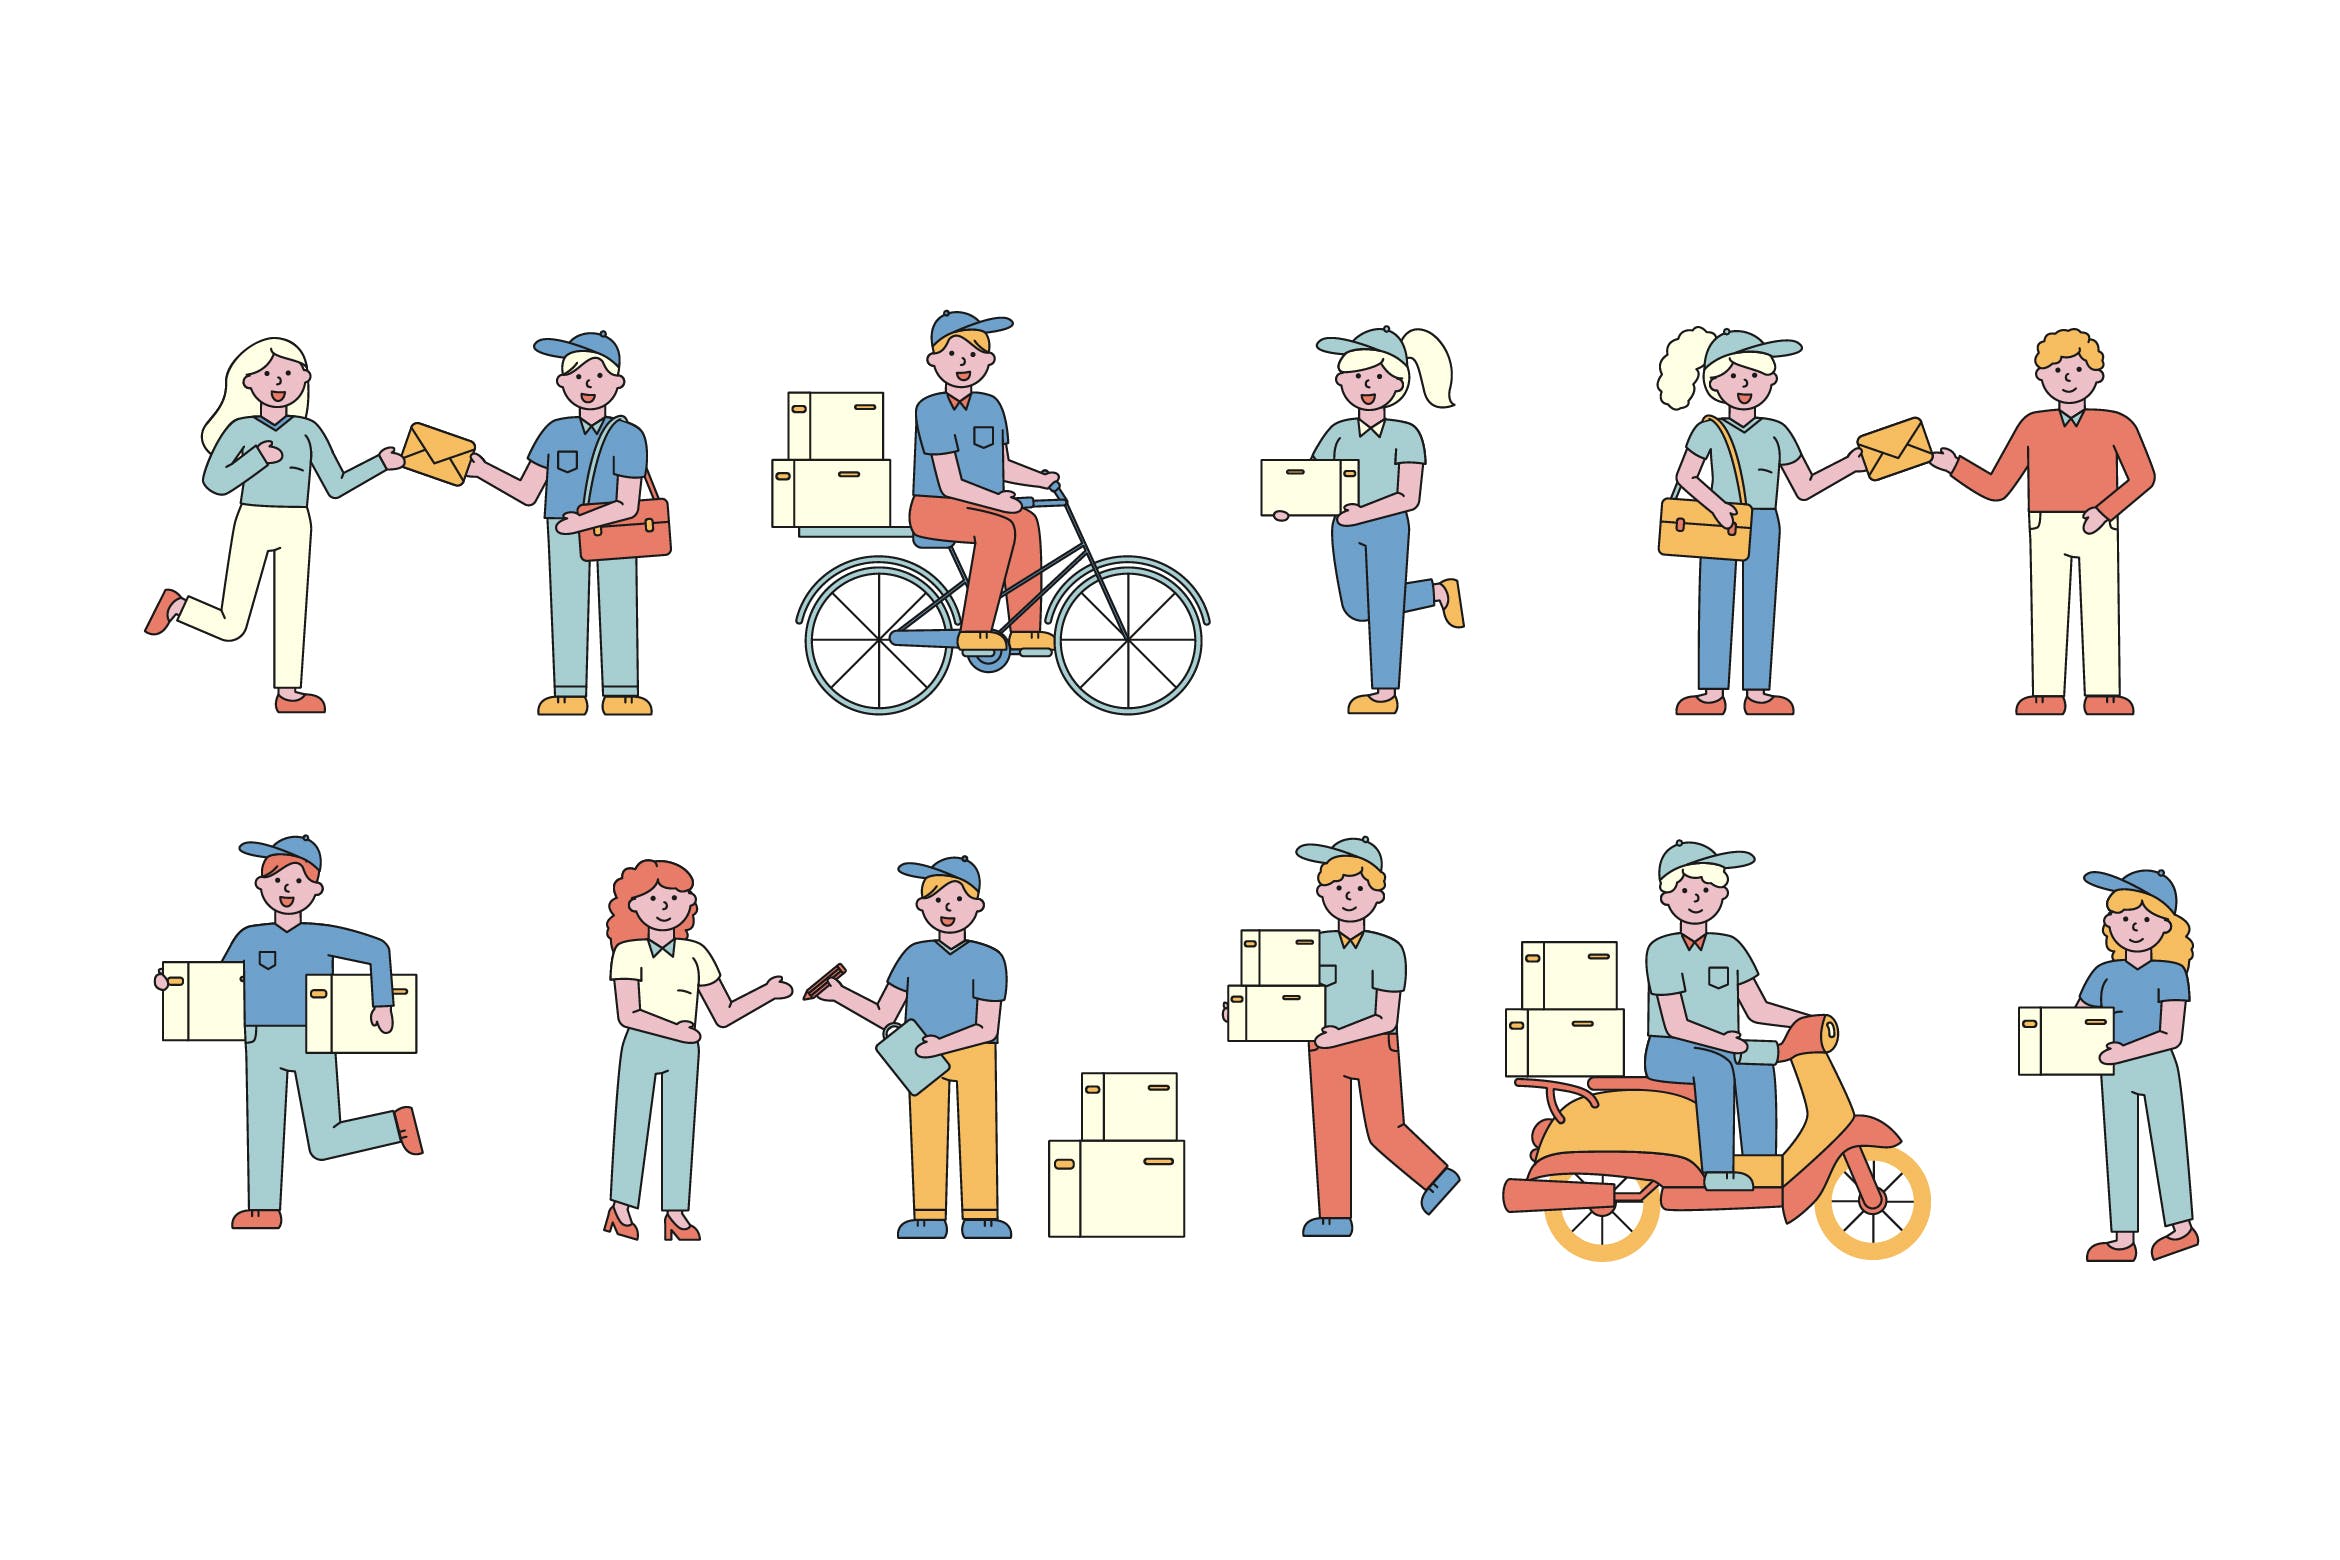 送药上门人物形象线条艺术矢量插画素材中国精选素材 Mail delivery Lineart People Character Collection插图